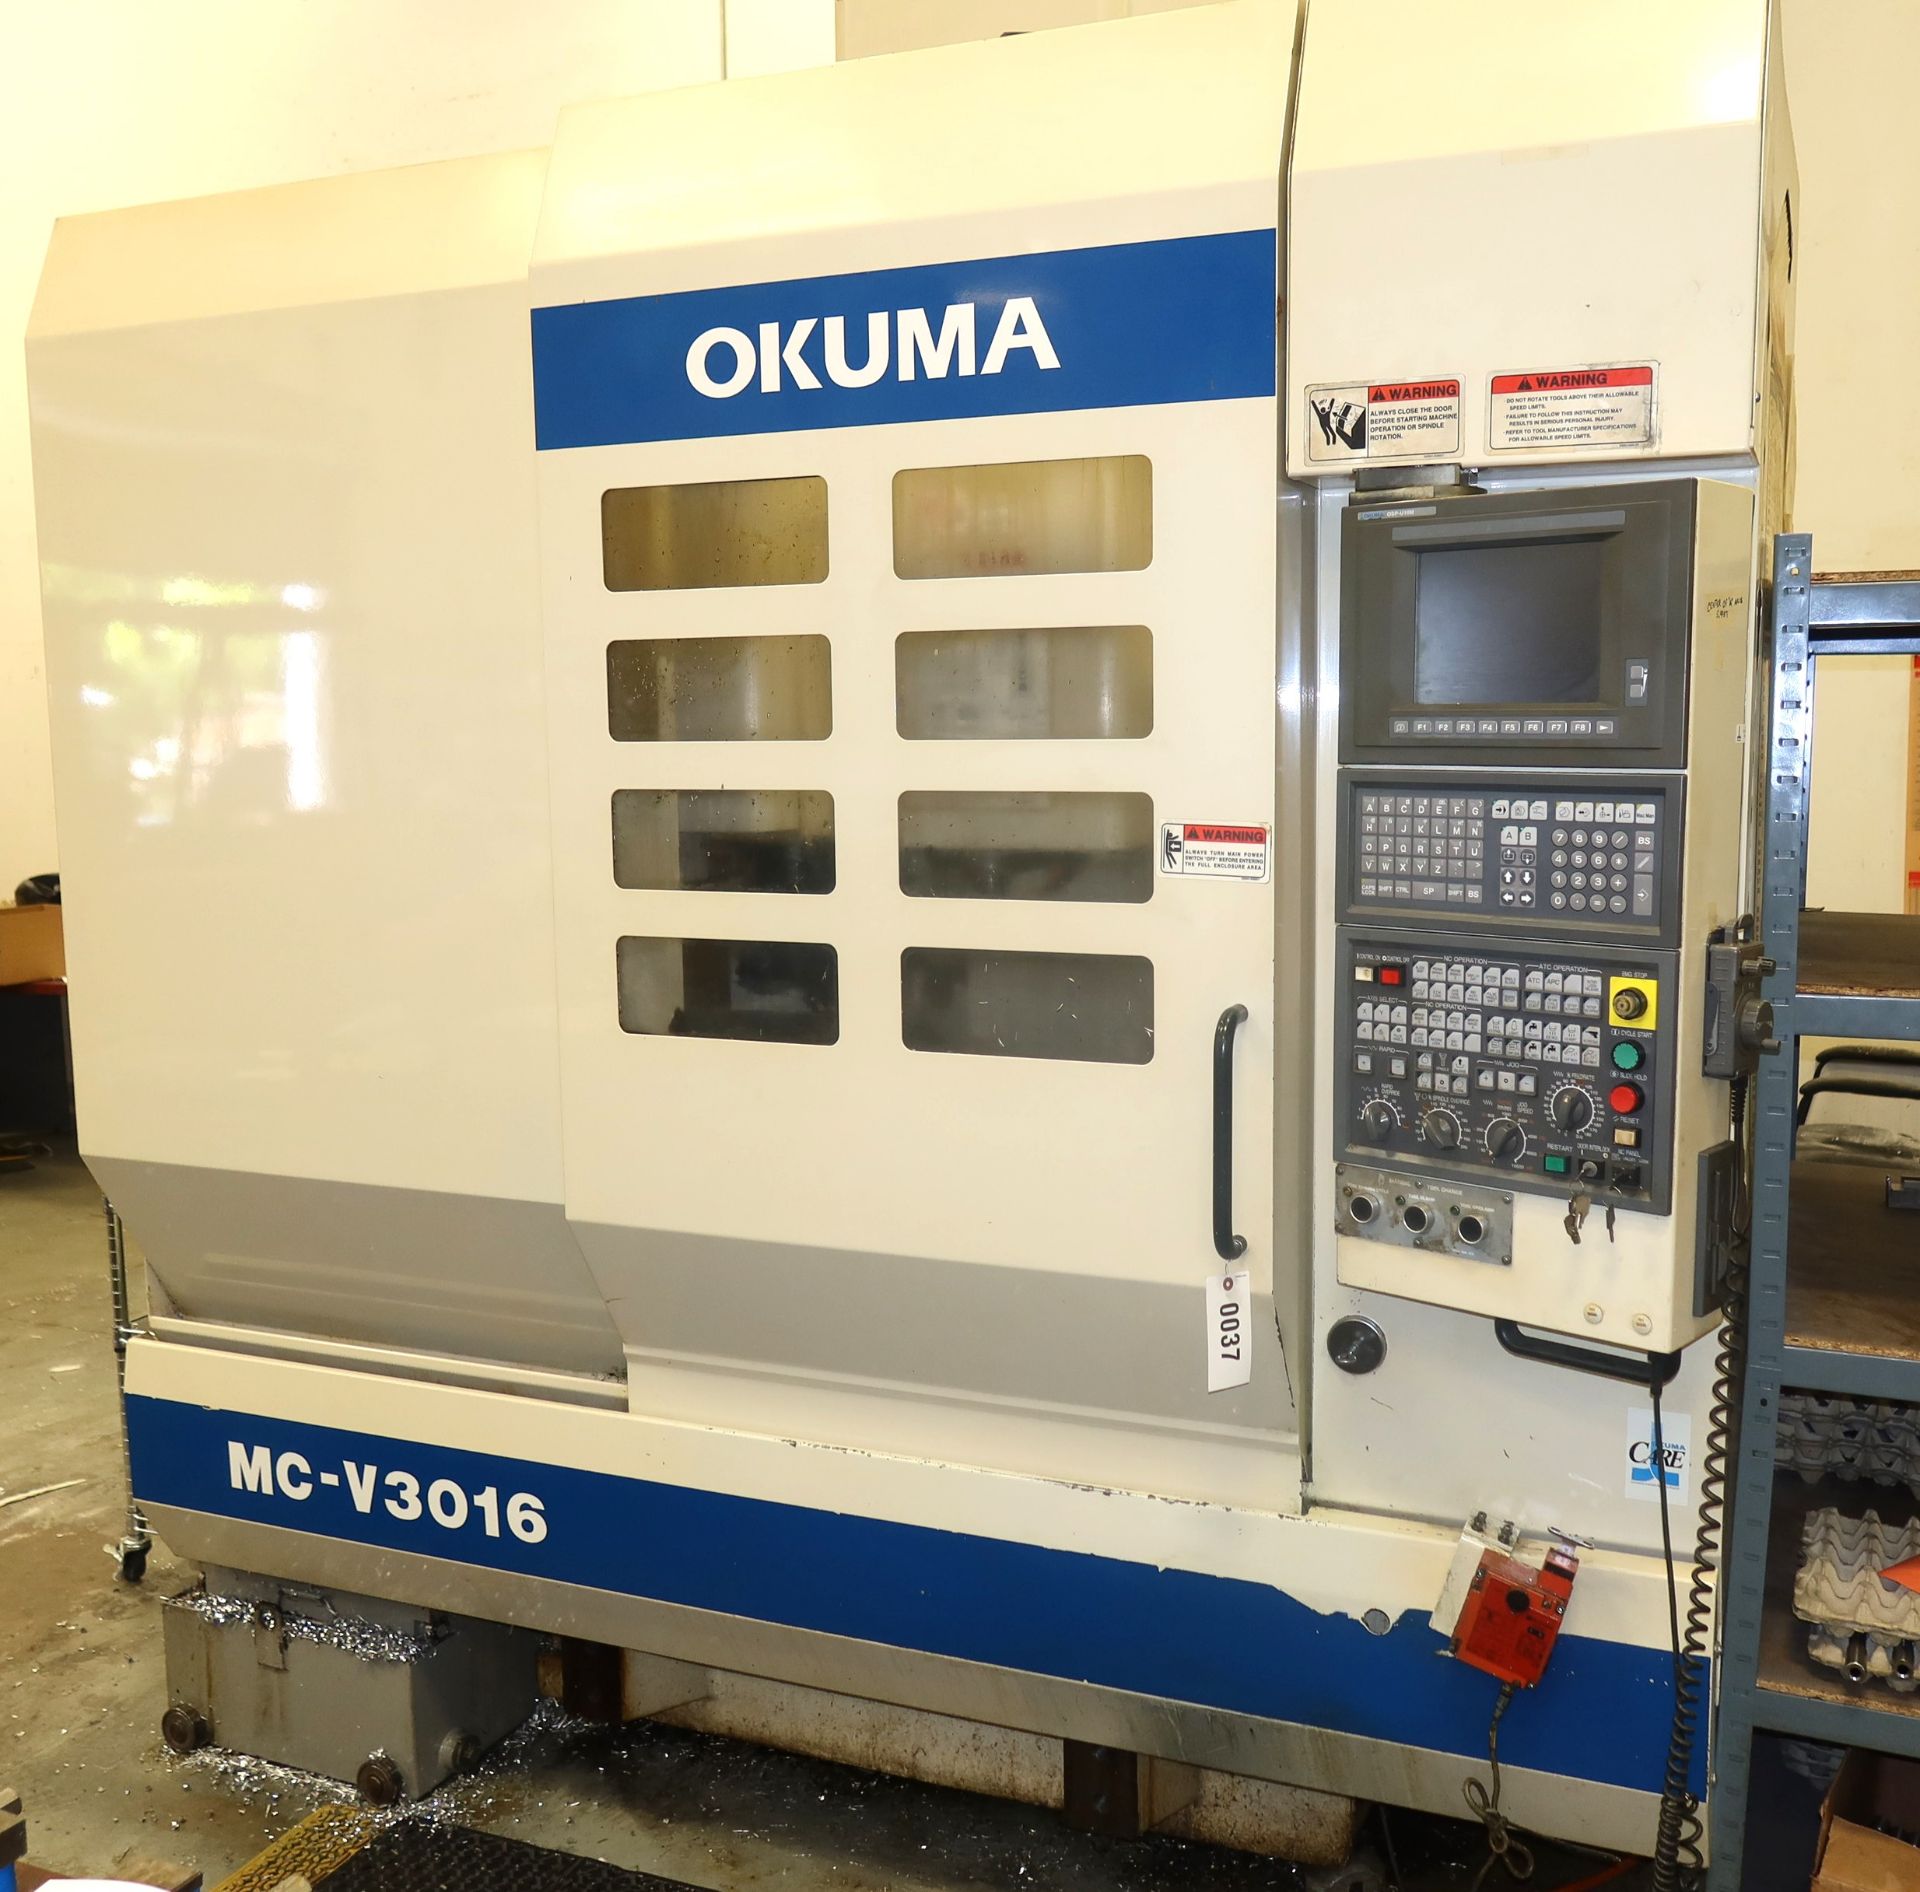 2003 OKUMA MC-V3016 5-AXIS CNC VERTICAL MACHINING CENTER, SN 0028 - Image 8 of 12